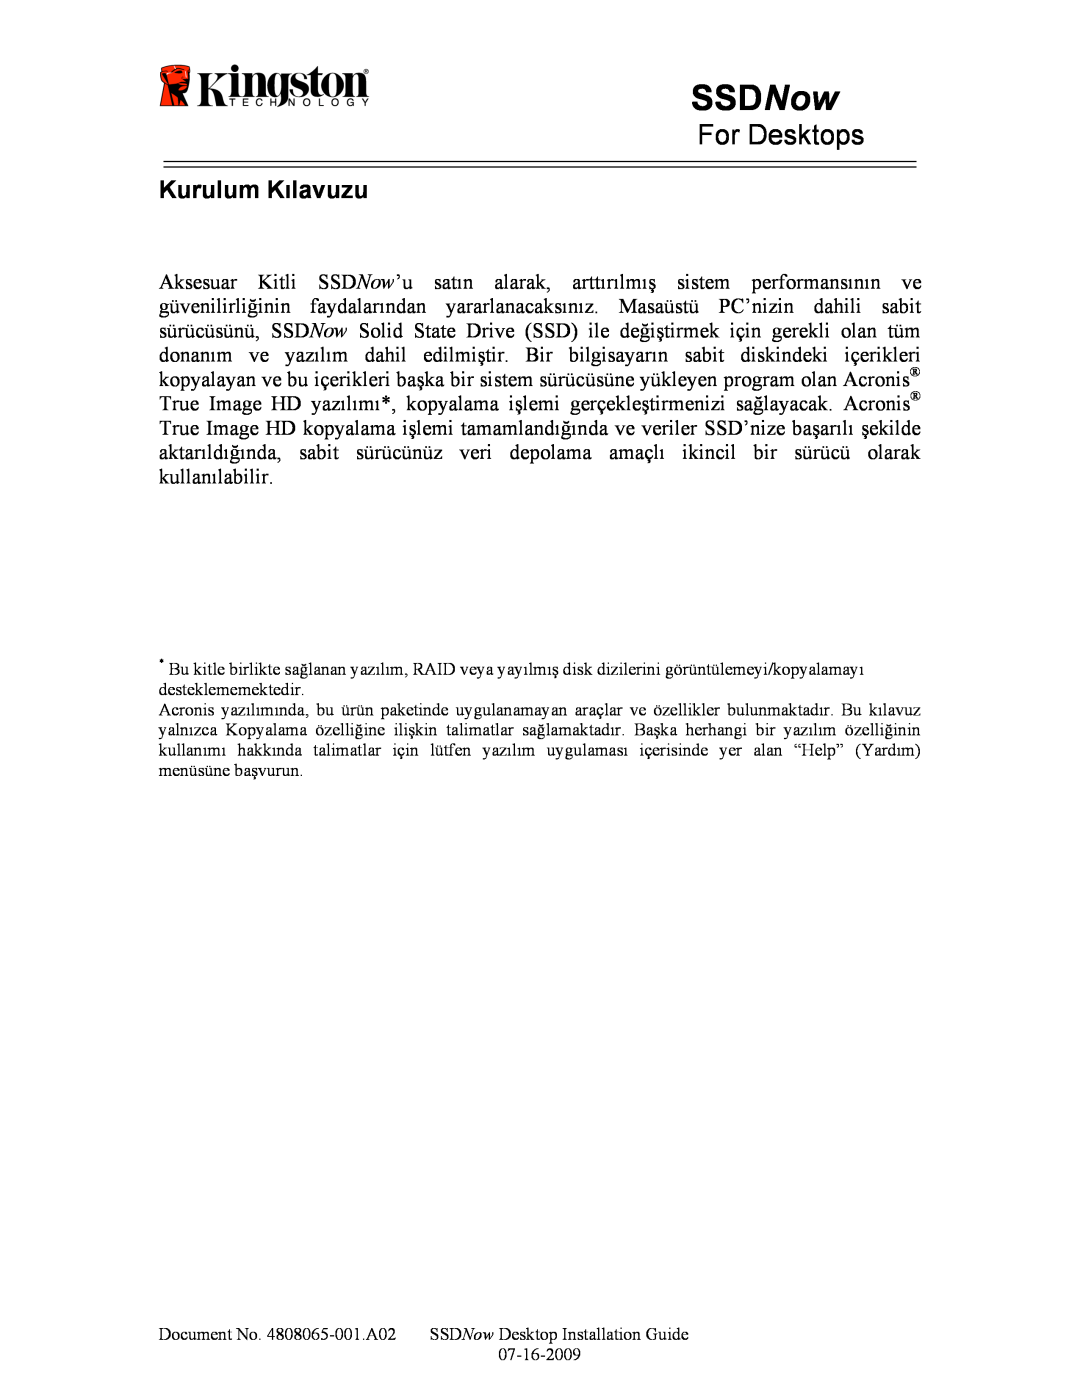 Kingston Technology 07-16-2009 manual Kurulum Kılavuzu, SSDNow, For Desktops 